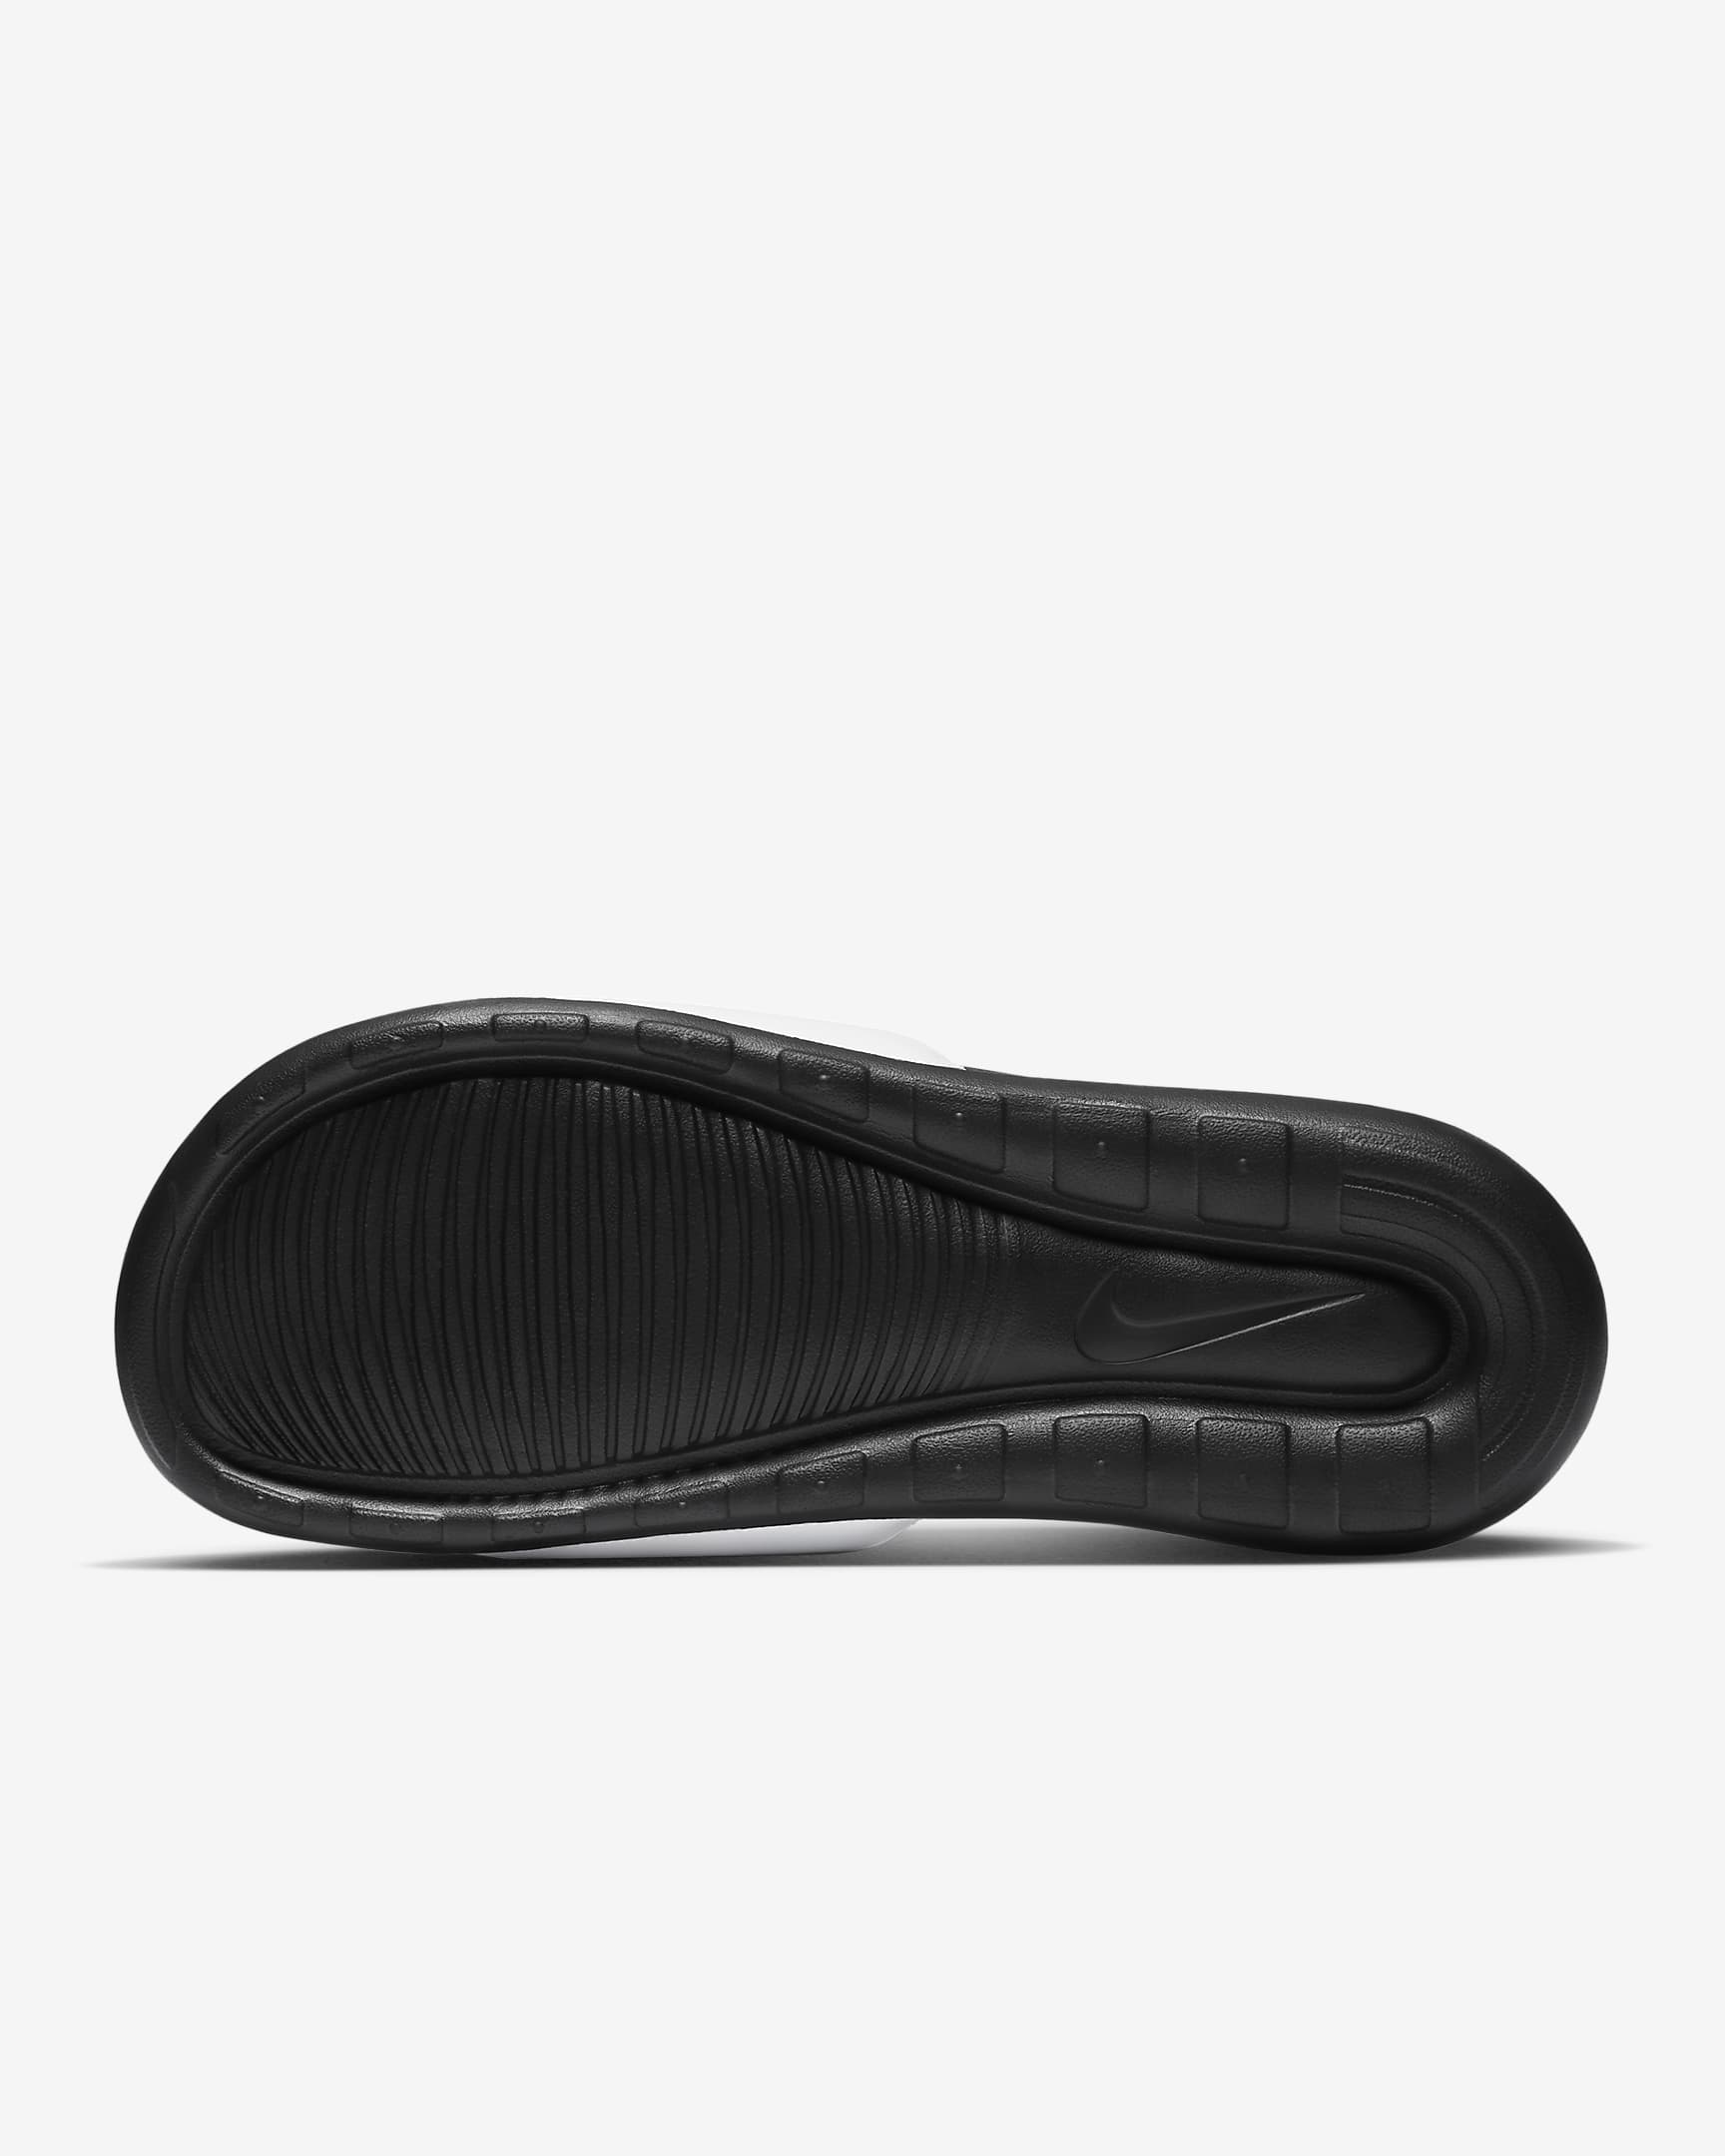 Nike Victori One Men's Slides - Black/White/Black